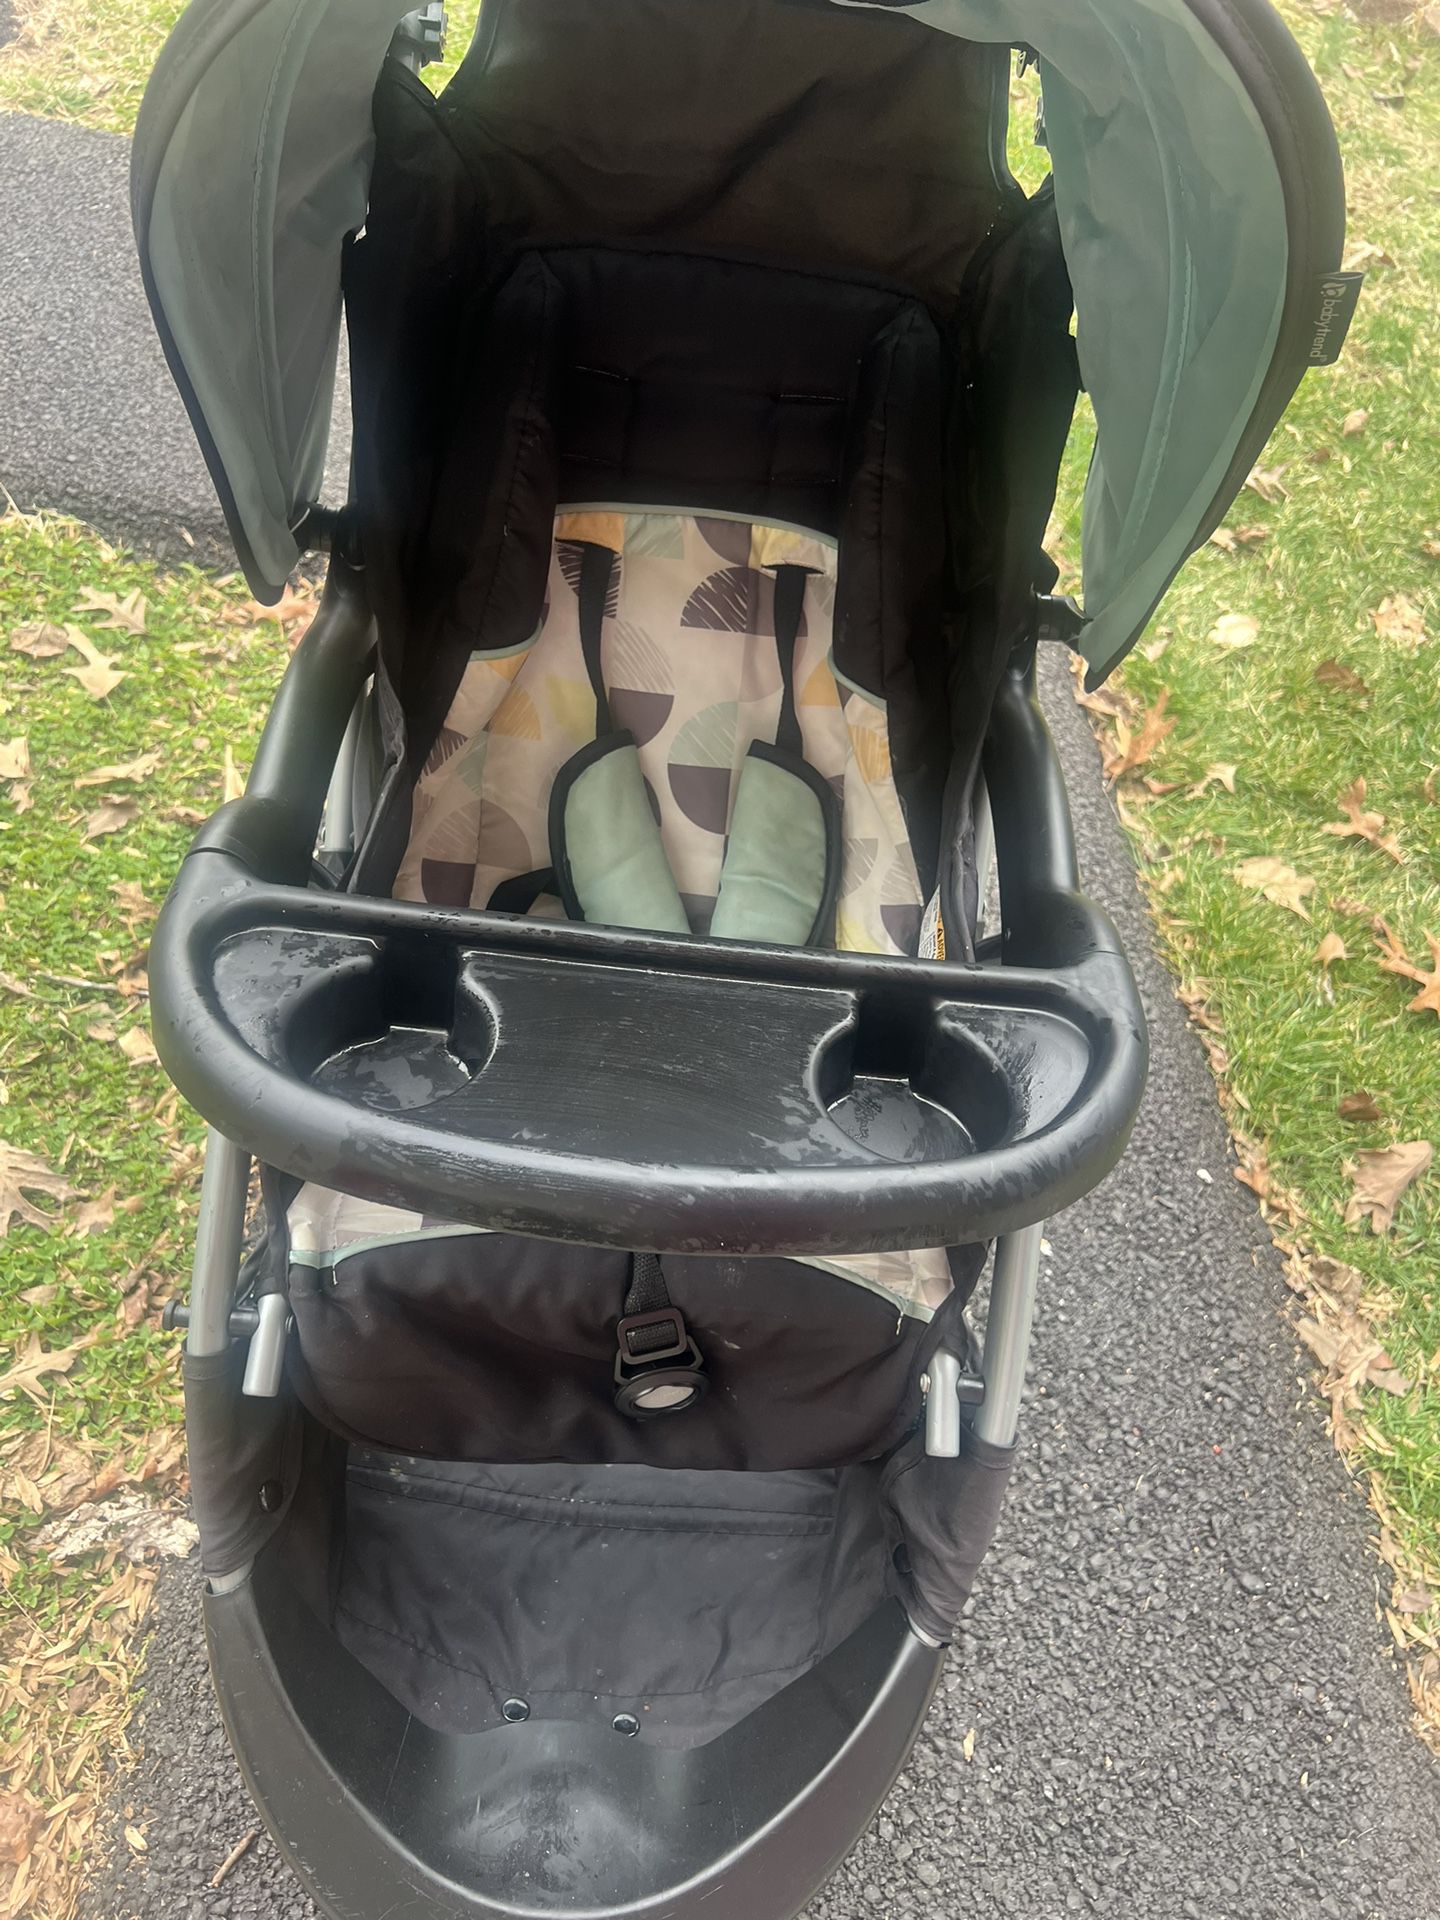 Single babytrend stroller